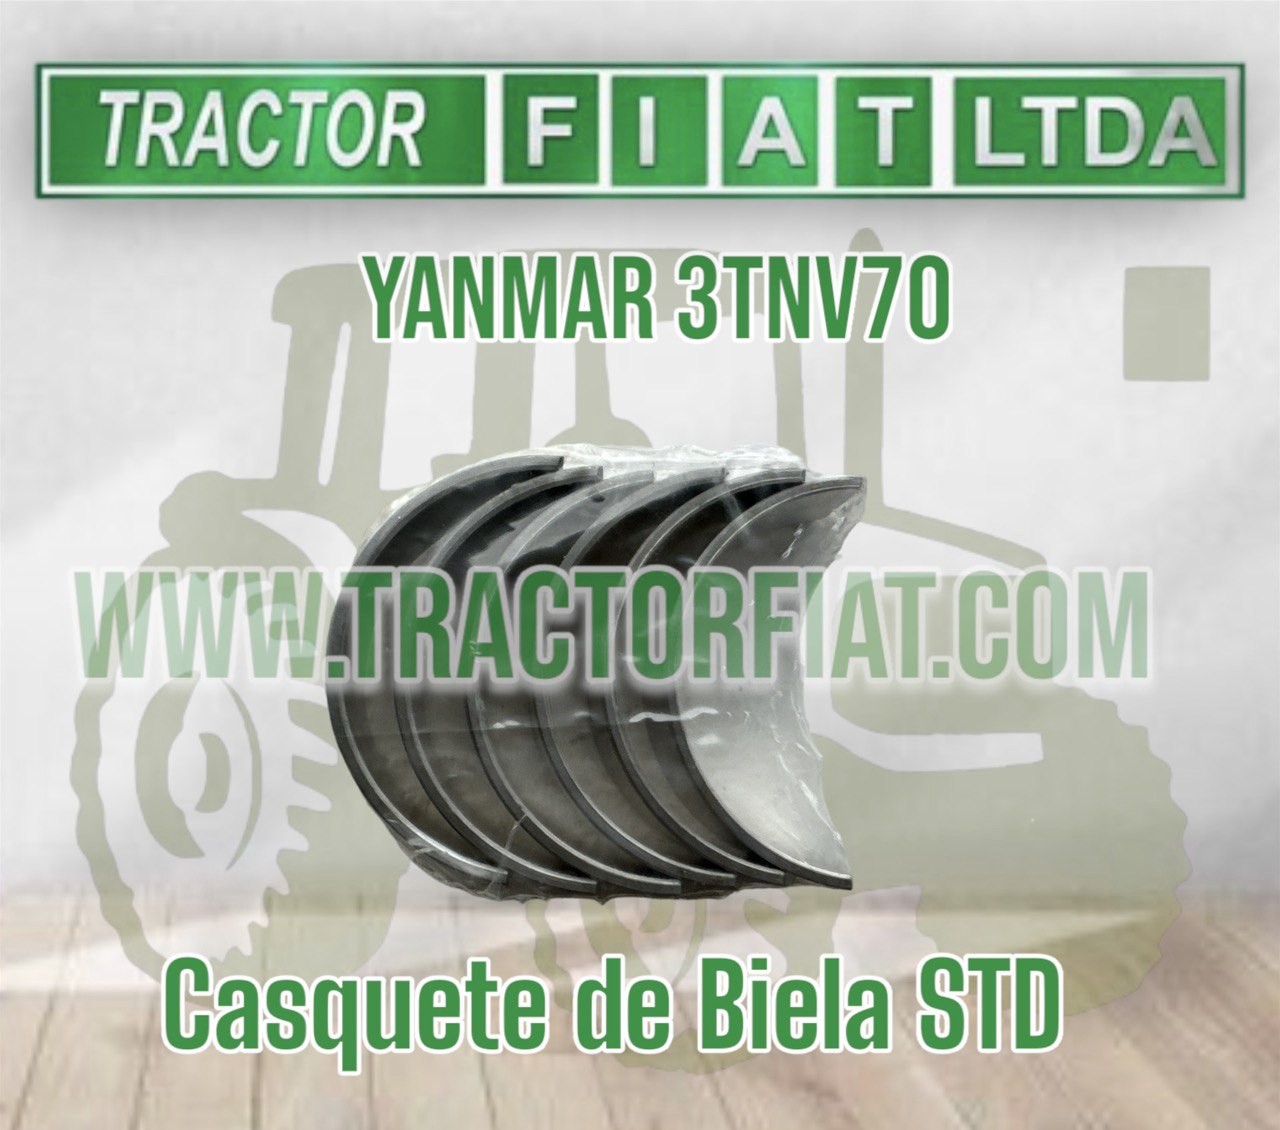 CASQUETES DE BIELA STD - MOTOR YANMAR 3TNV70.